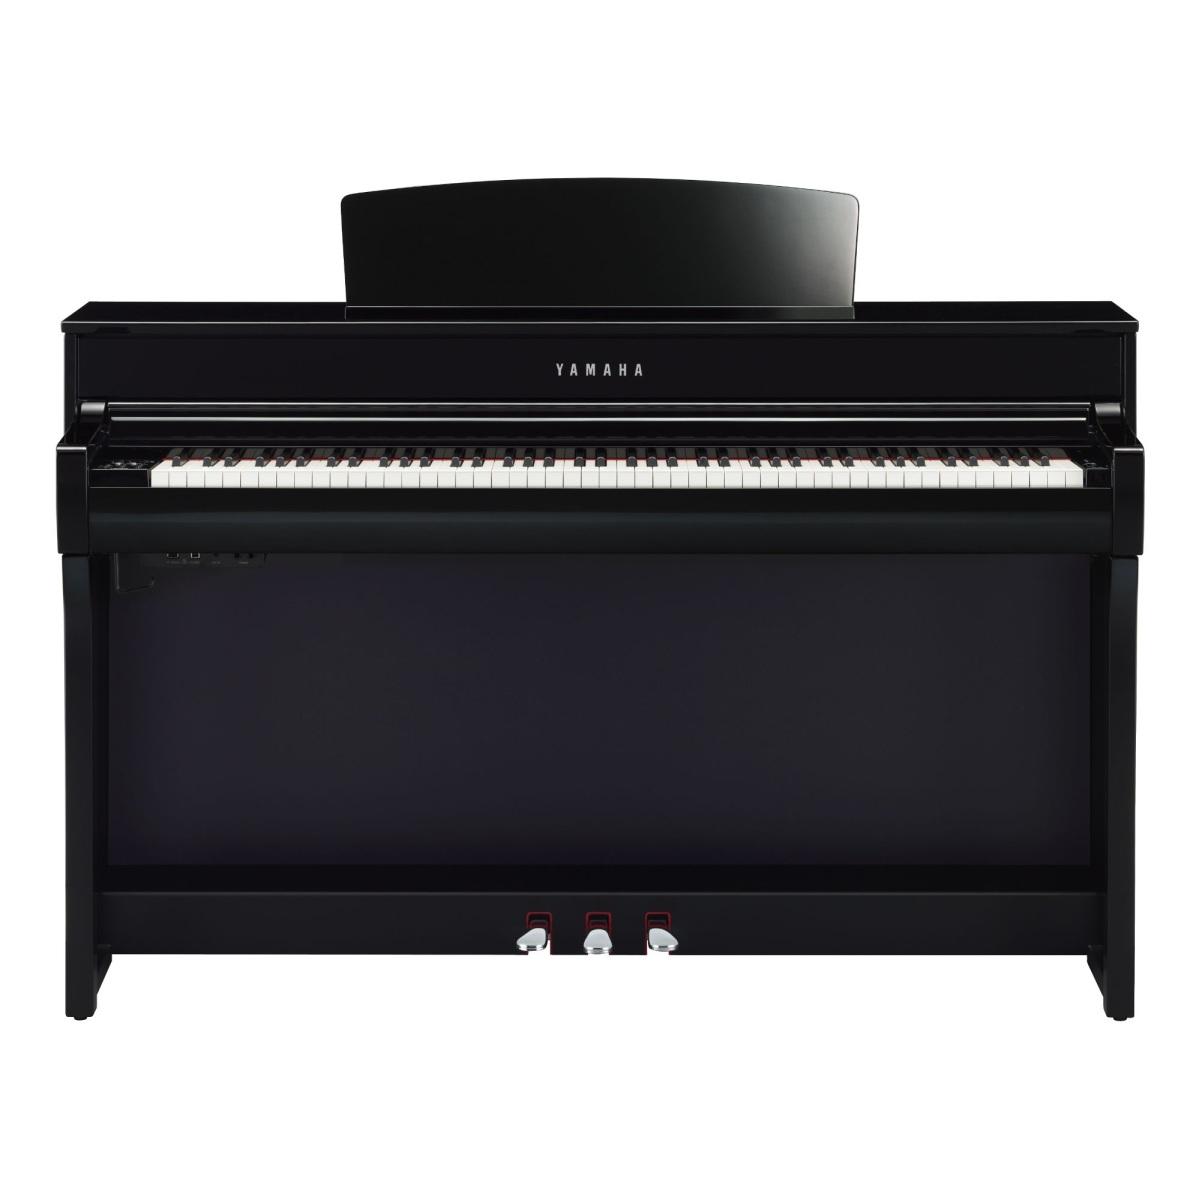 Yamaha clp745b nero satinato pianoforte digitale